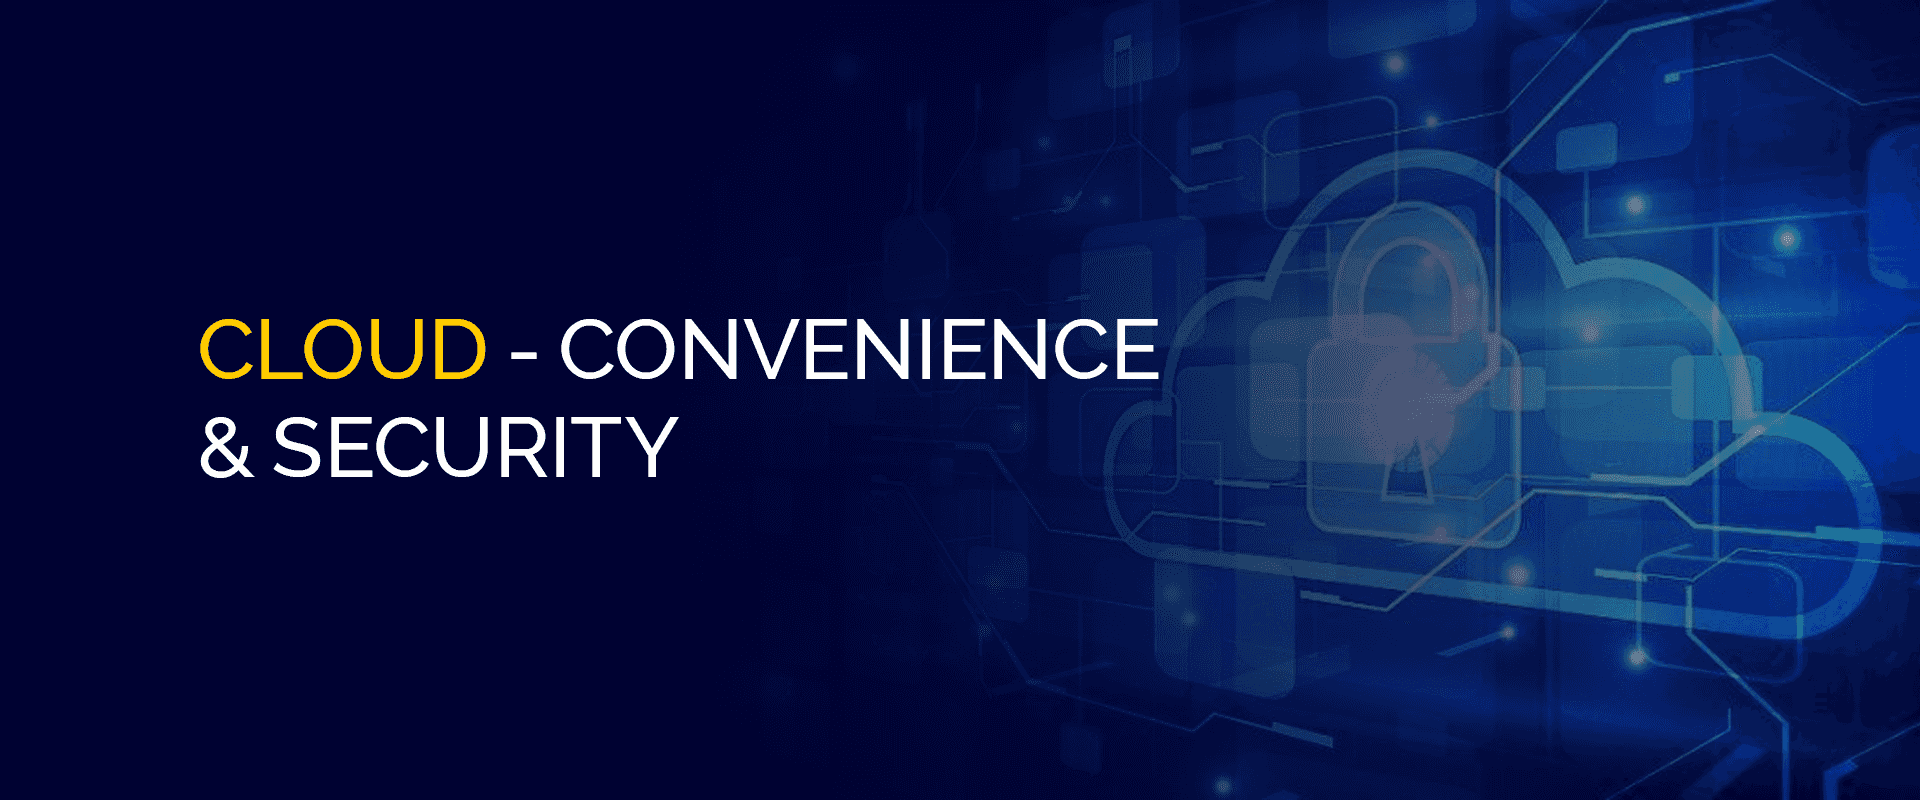 Cloud - Convenience & Security